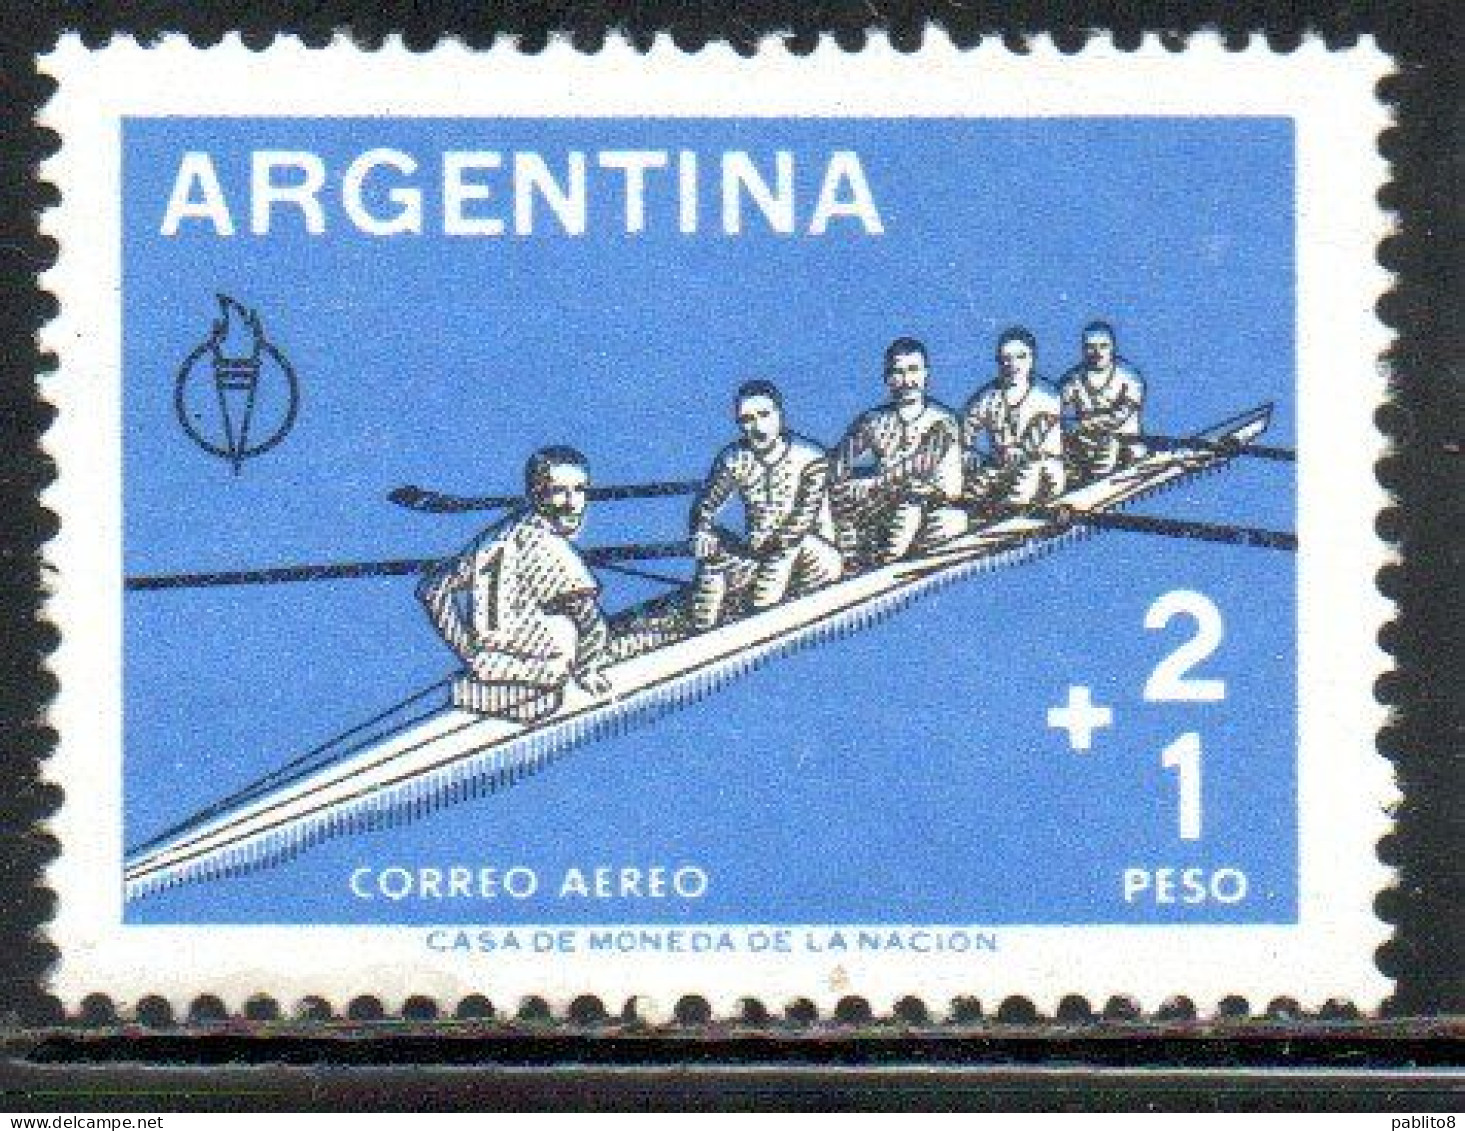 ARGENTINA 1959 AIR POST MAIL AIRMAIL CORREO AEREO ATHLETICS ROWING 2p + 1p MNH - Luftpost